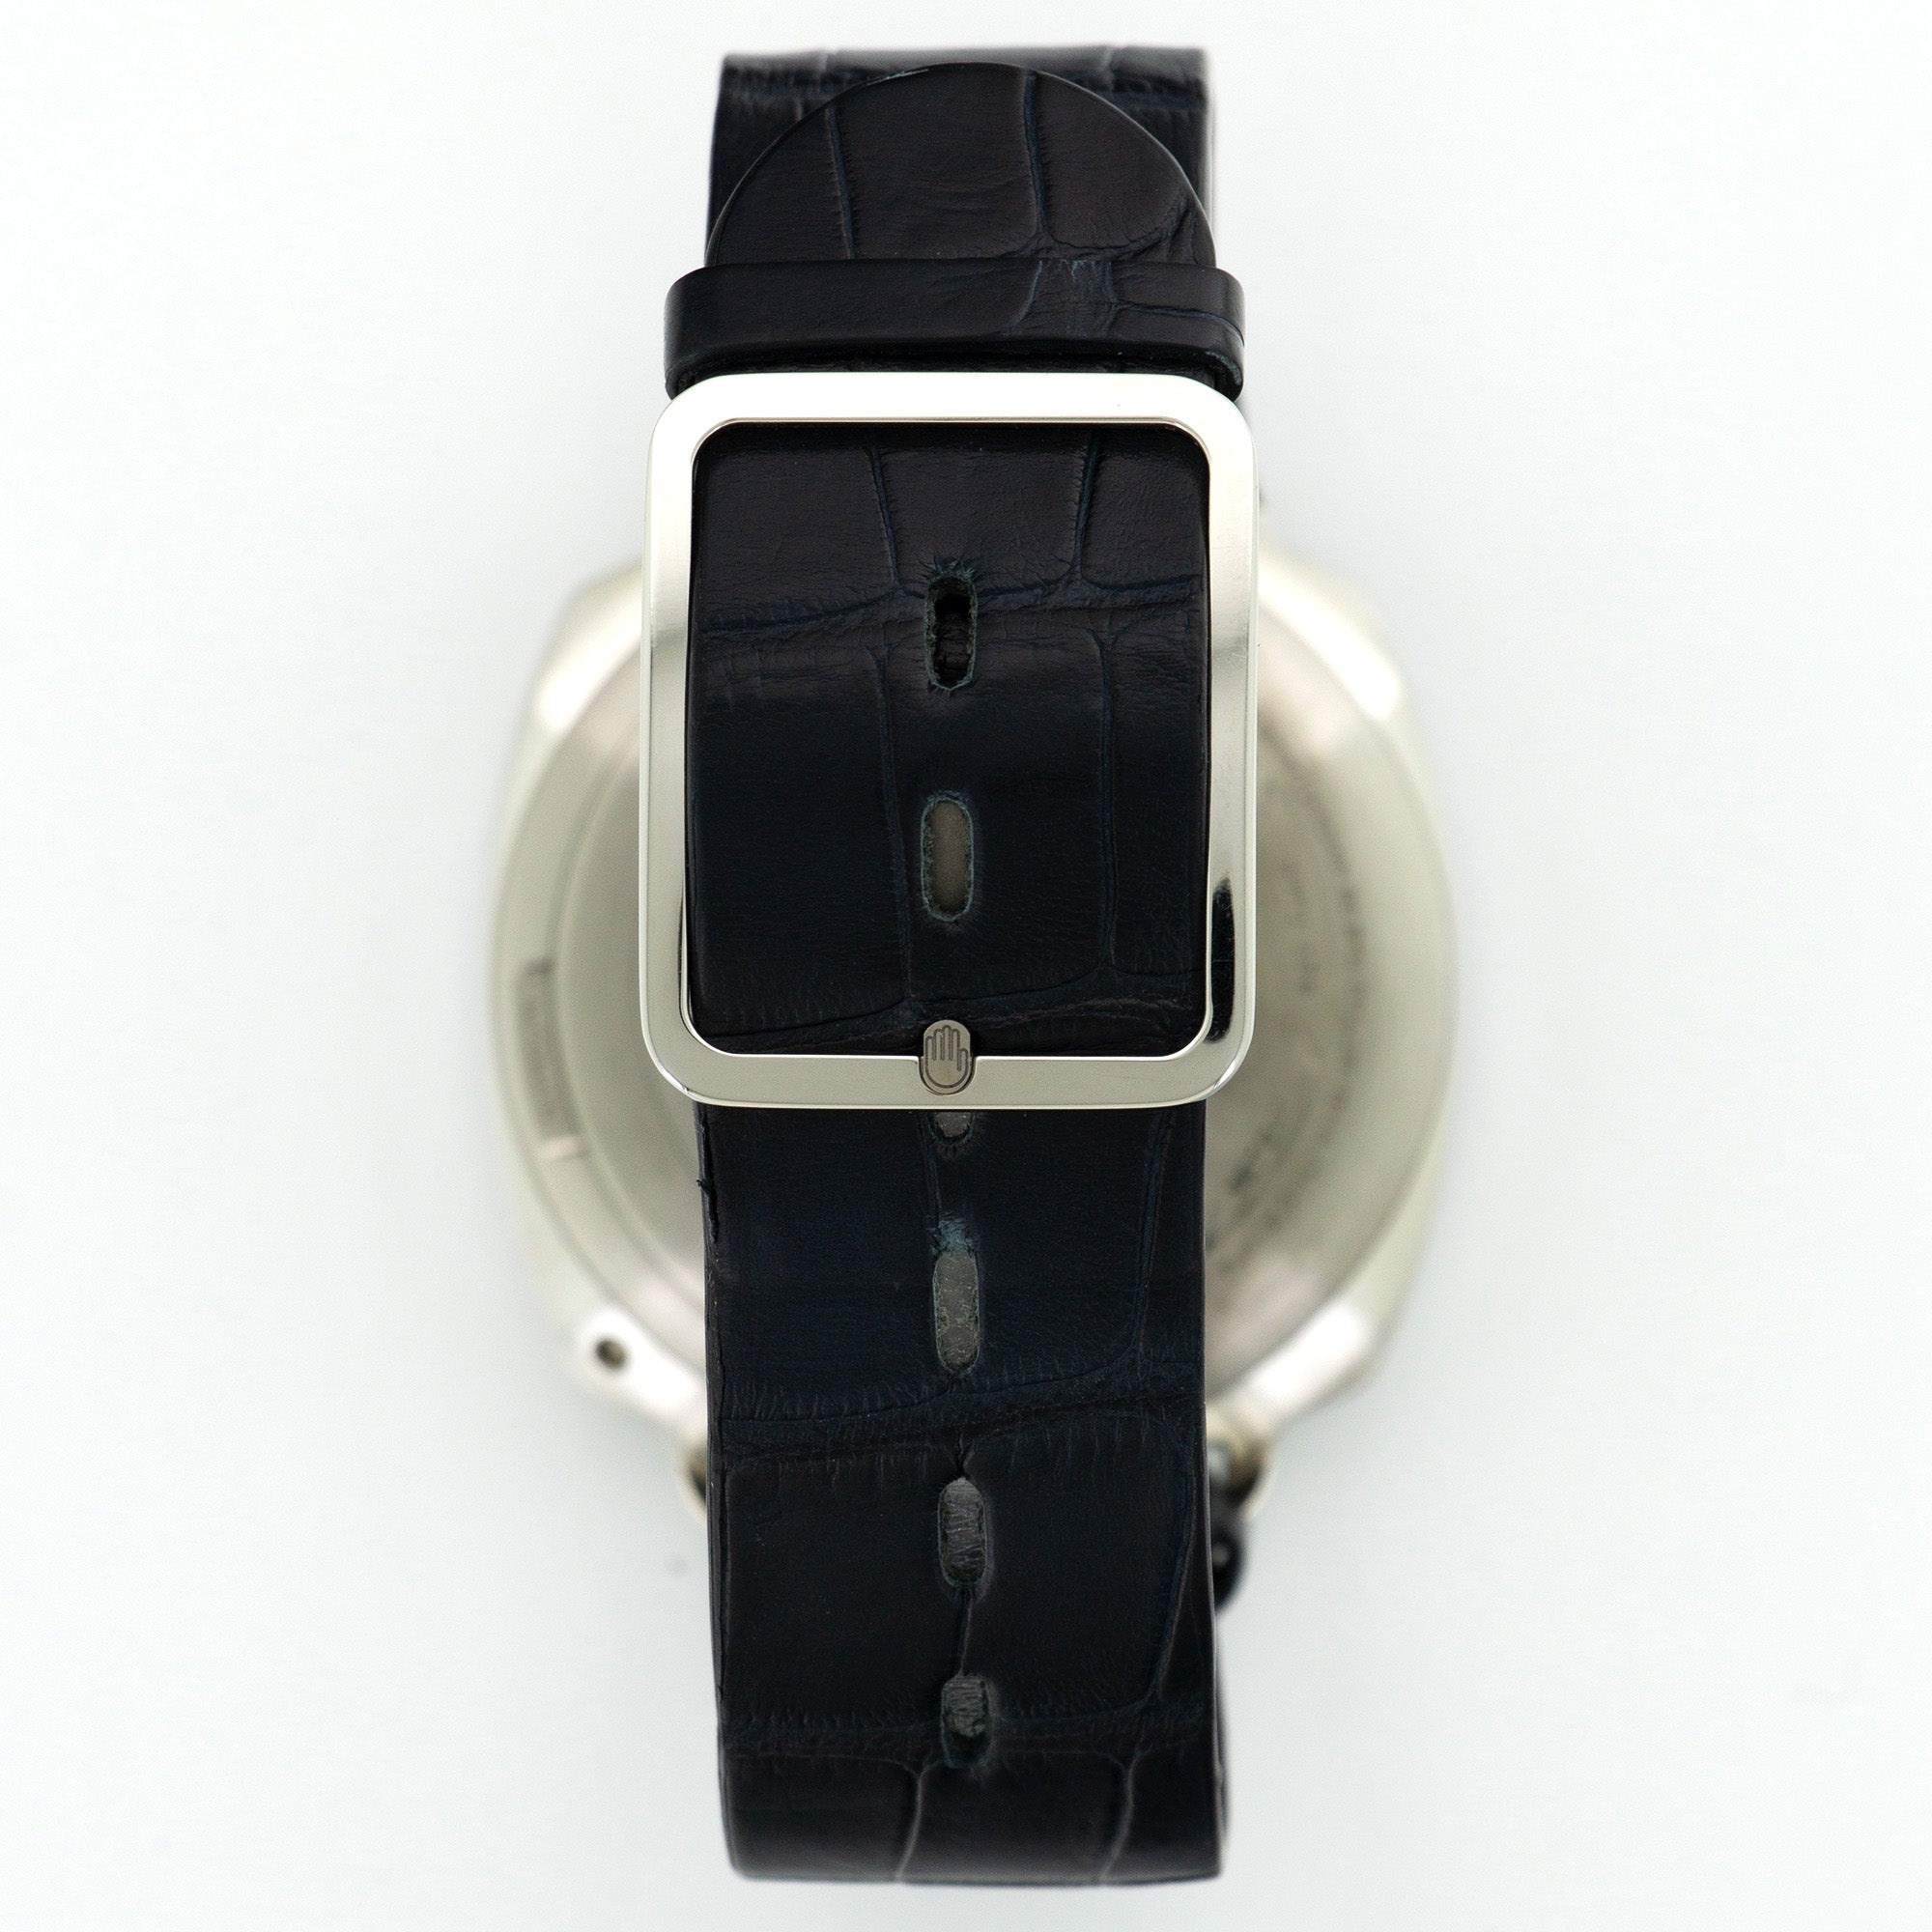 Ressence - Ressence Type 1 Squared Watch - The Keystone Watches